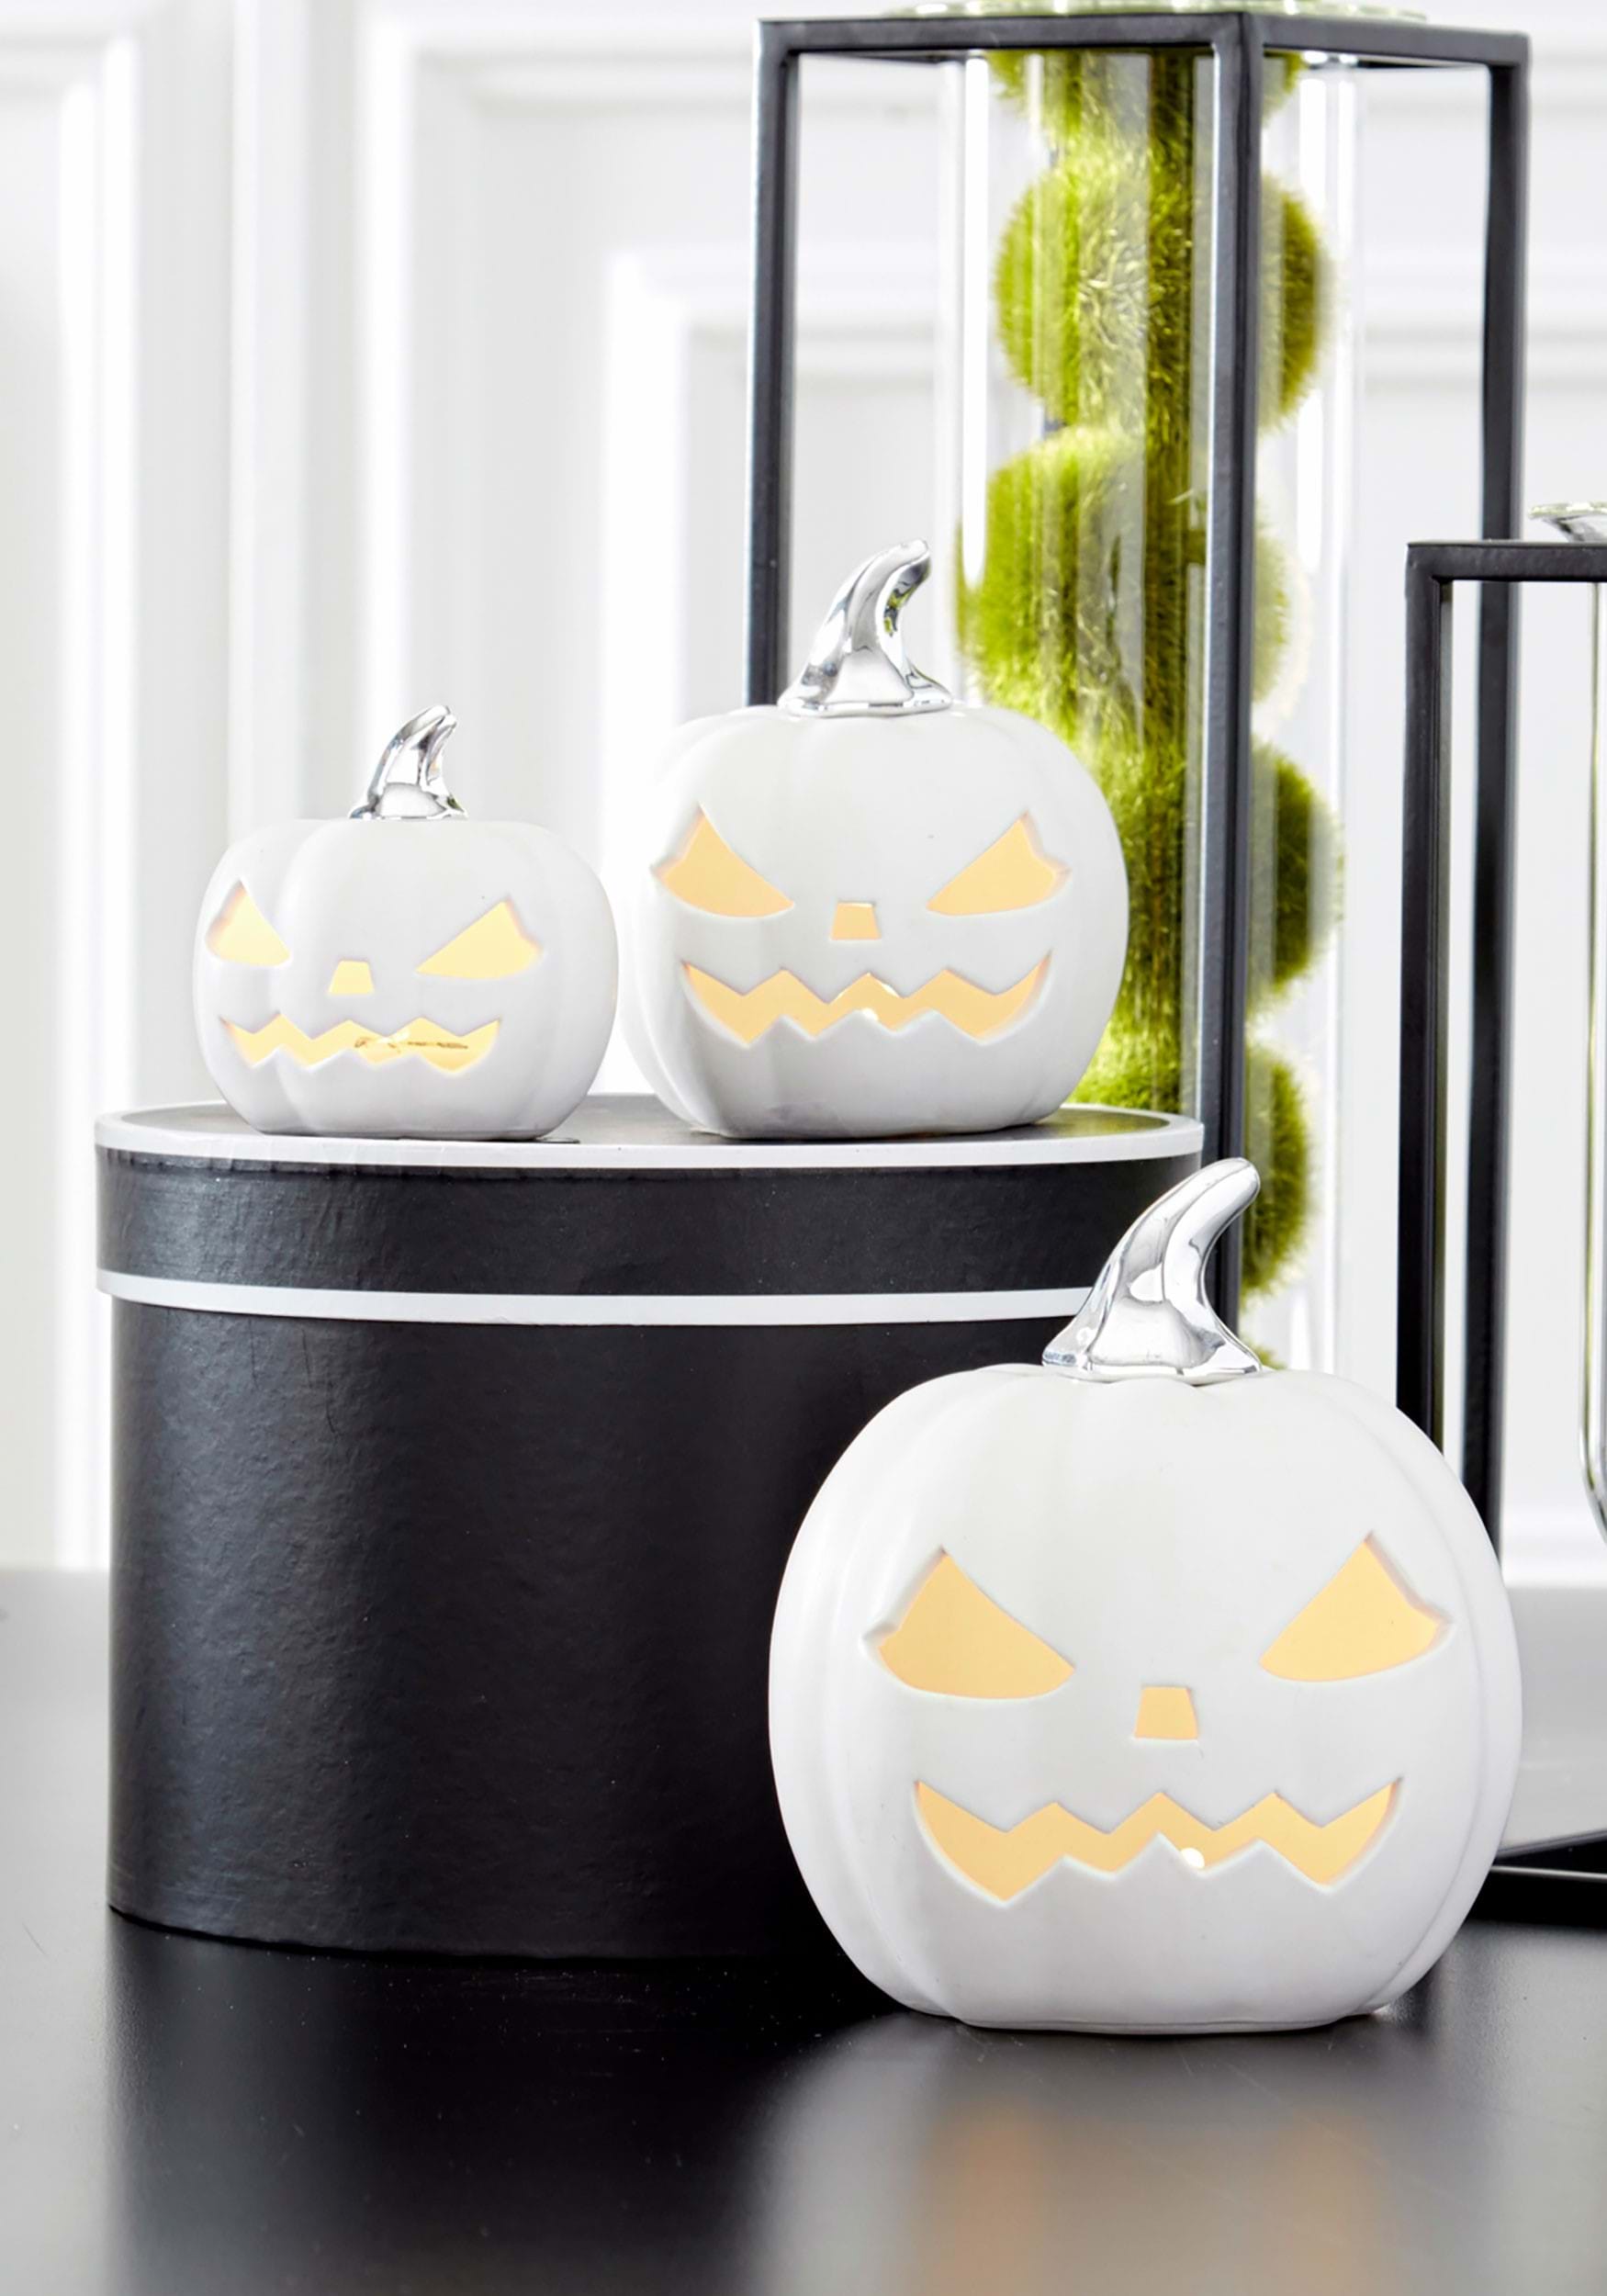 3.75 White Ceramic LED Jack 'O Lantern Prop , Pumpkin Decorations